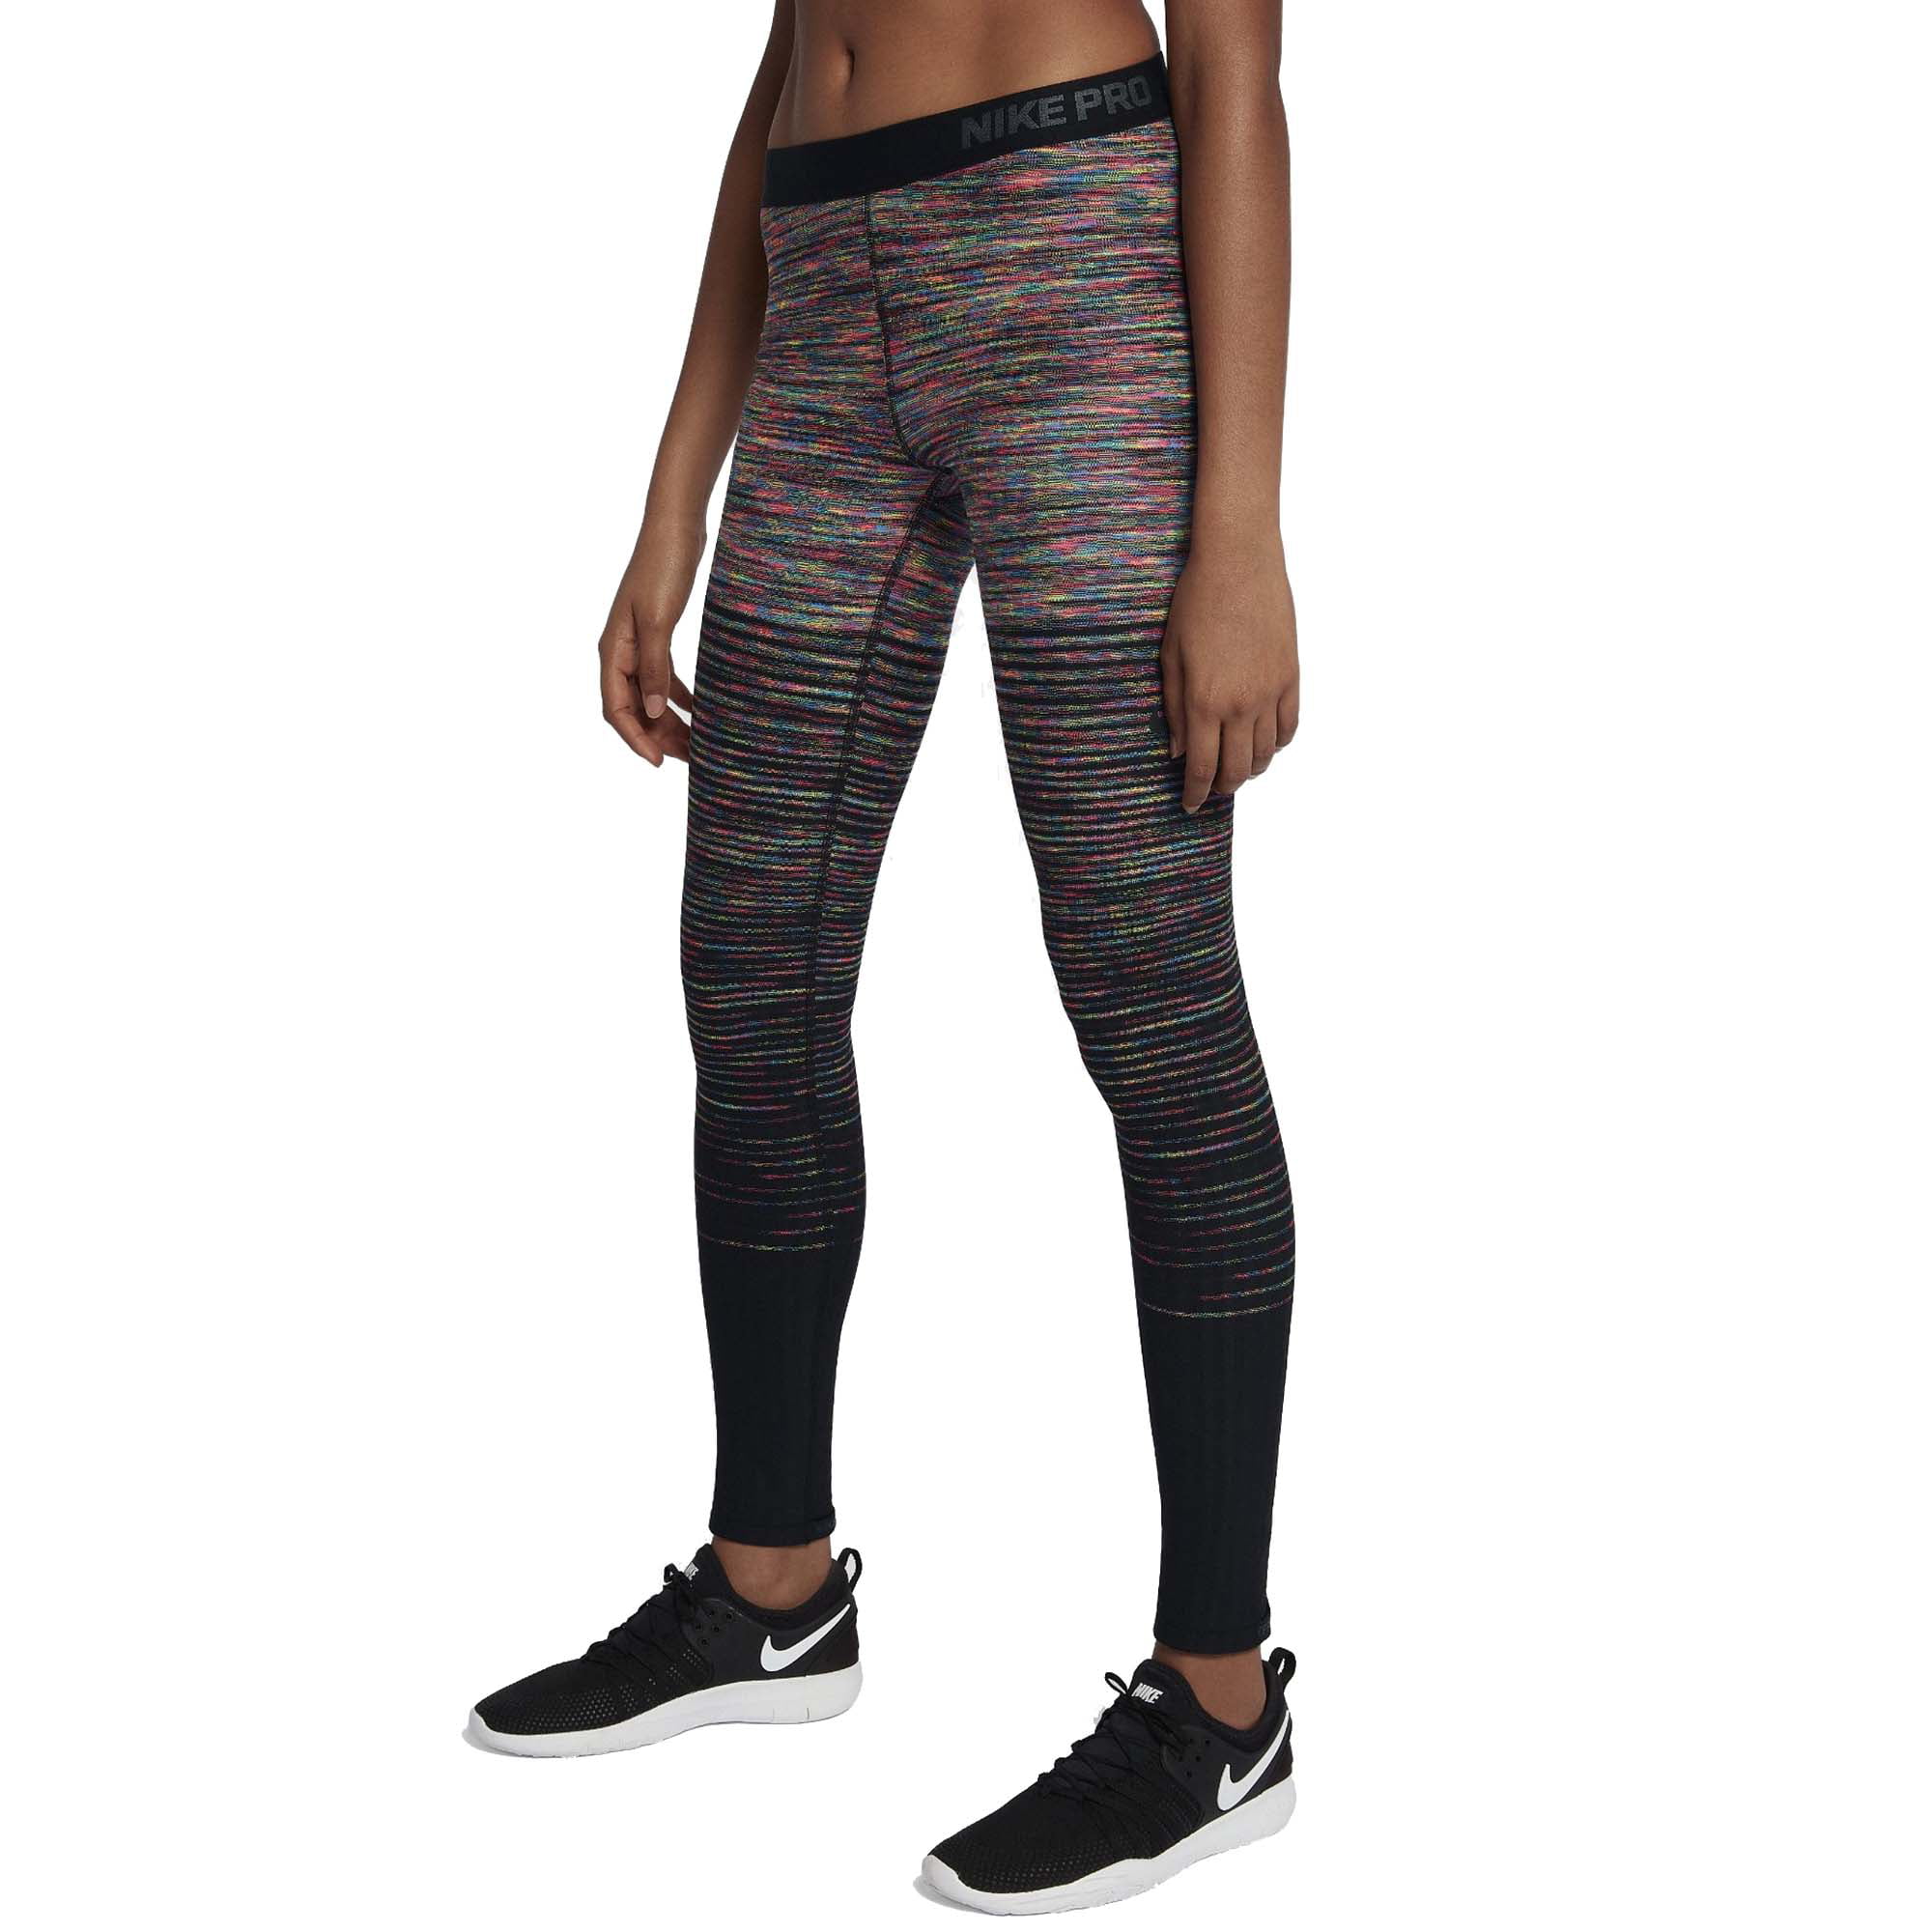 Nike Women's Hyperwarm Brushed Tights (Black/Multi Color, Medium) - Walmart.com